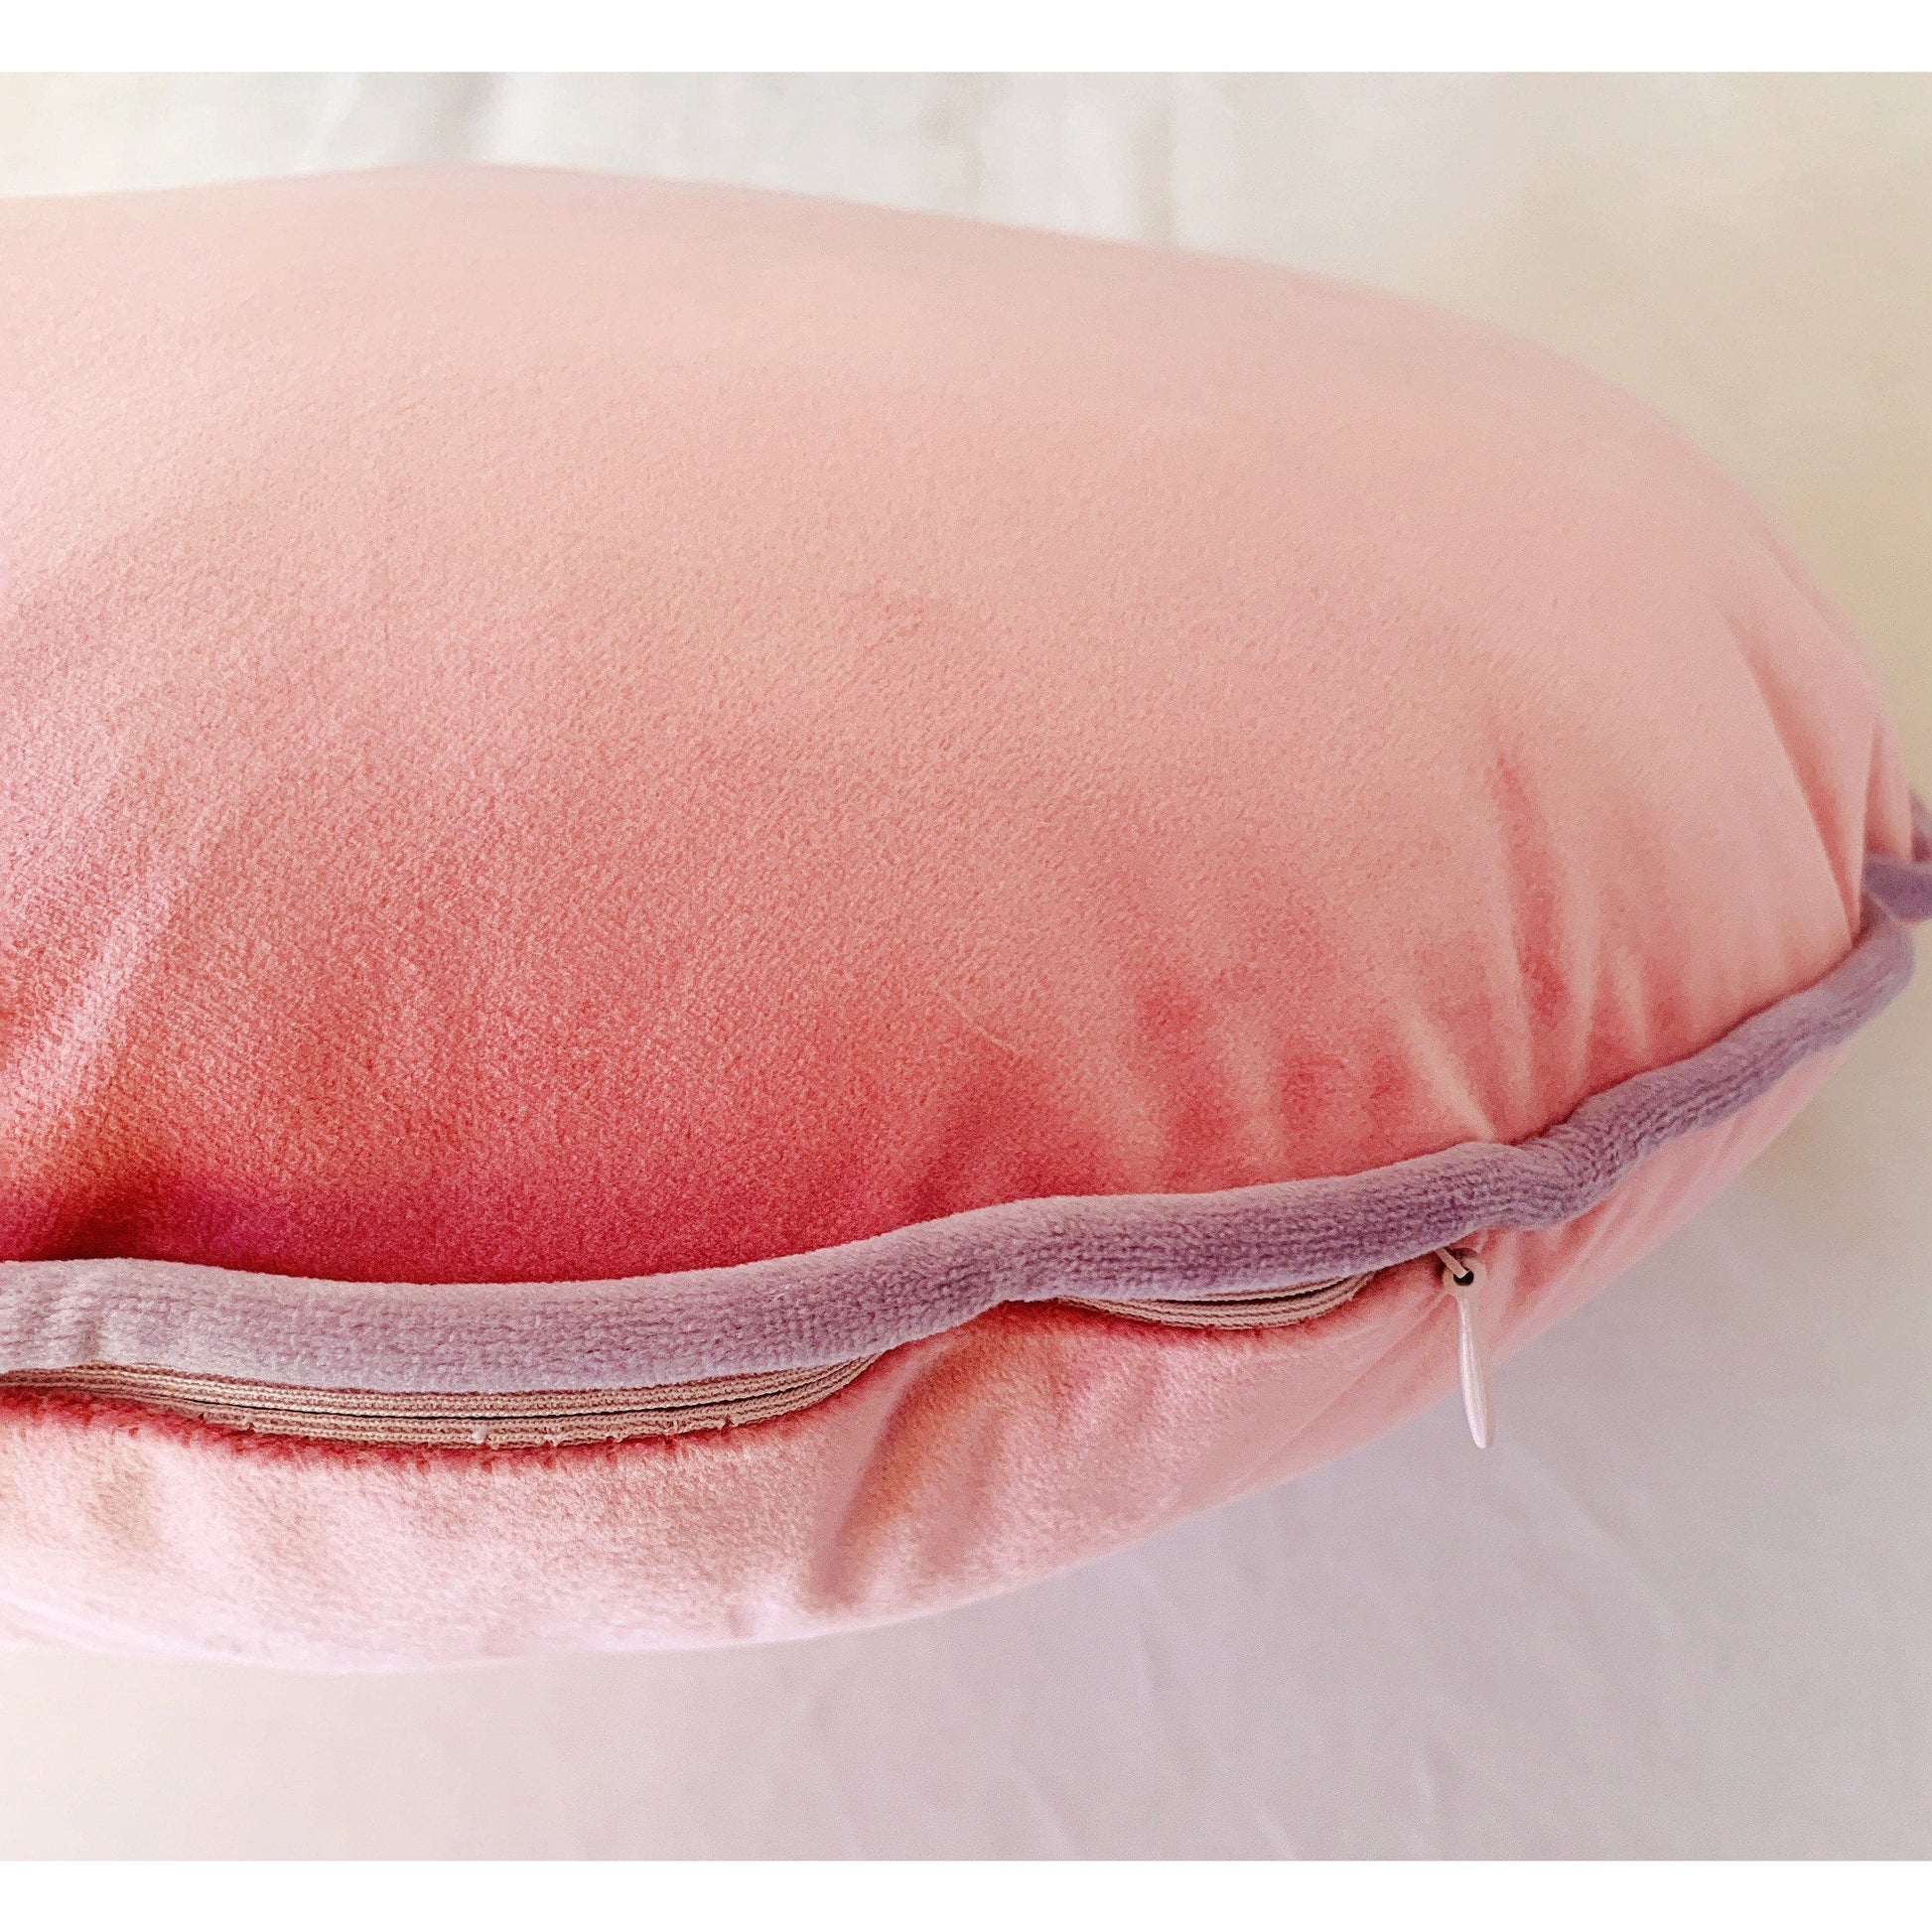 Baby Pink Boho Throw Pillow, Decorative Pillow Cover